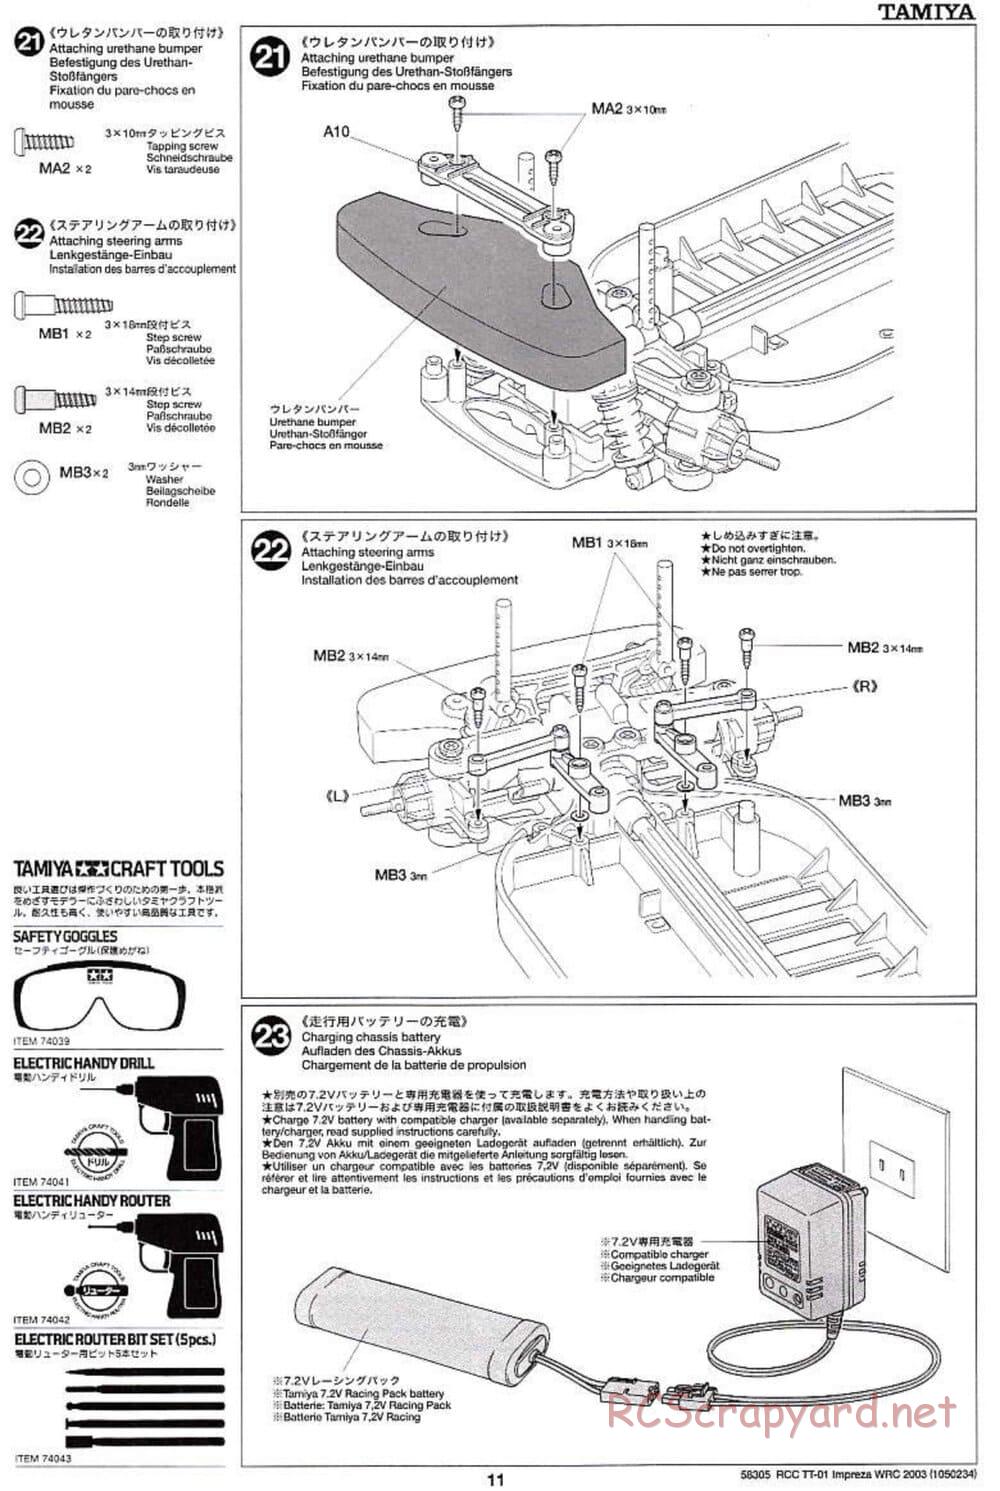 Tamiya - Subaru Impreza WRC 2003 - TT-01 Chassis - Manual - Page 11